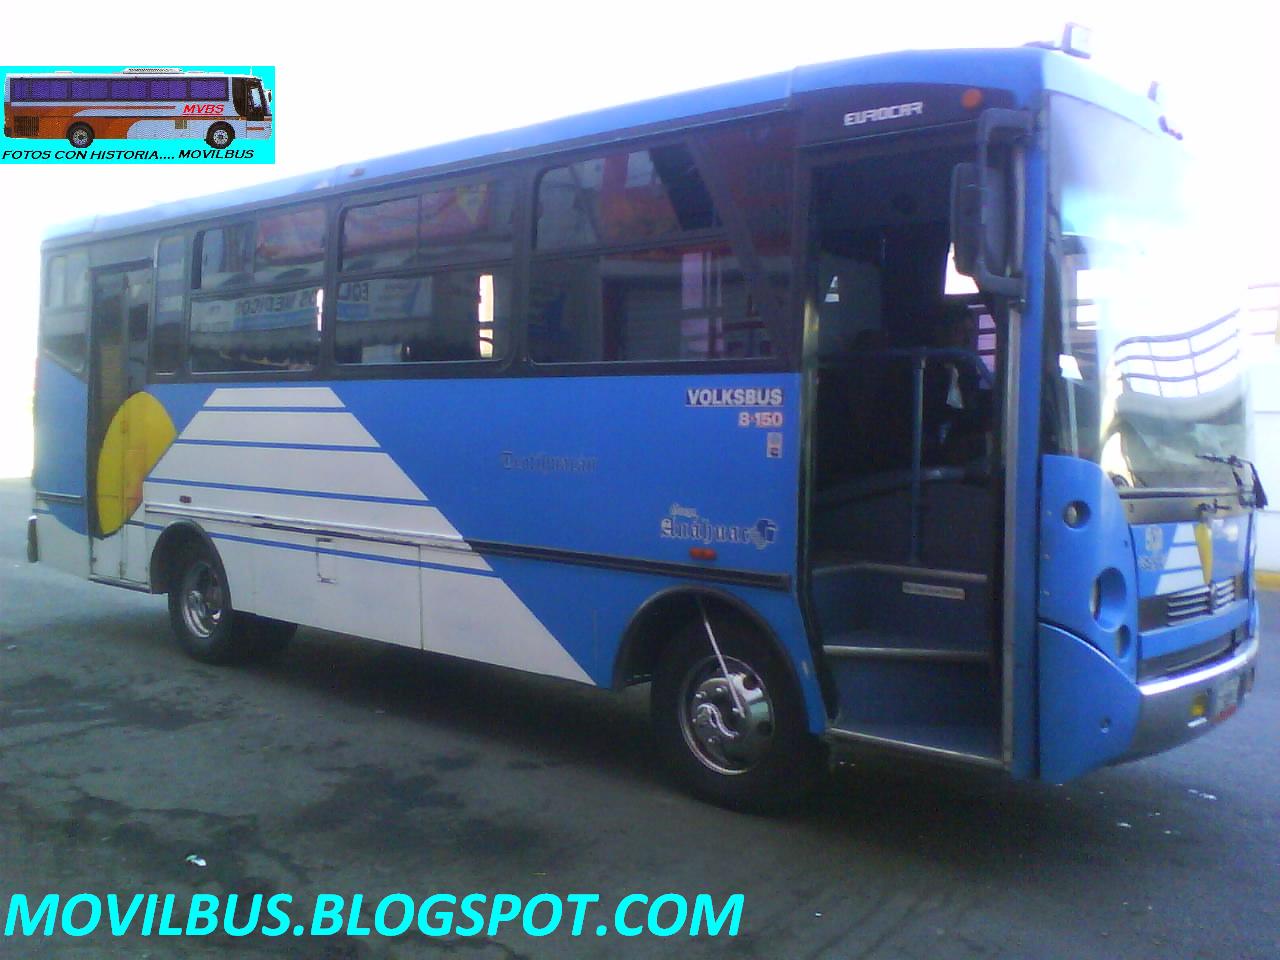 Volksbus 8-150 Thunder Plus